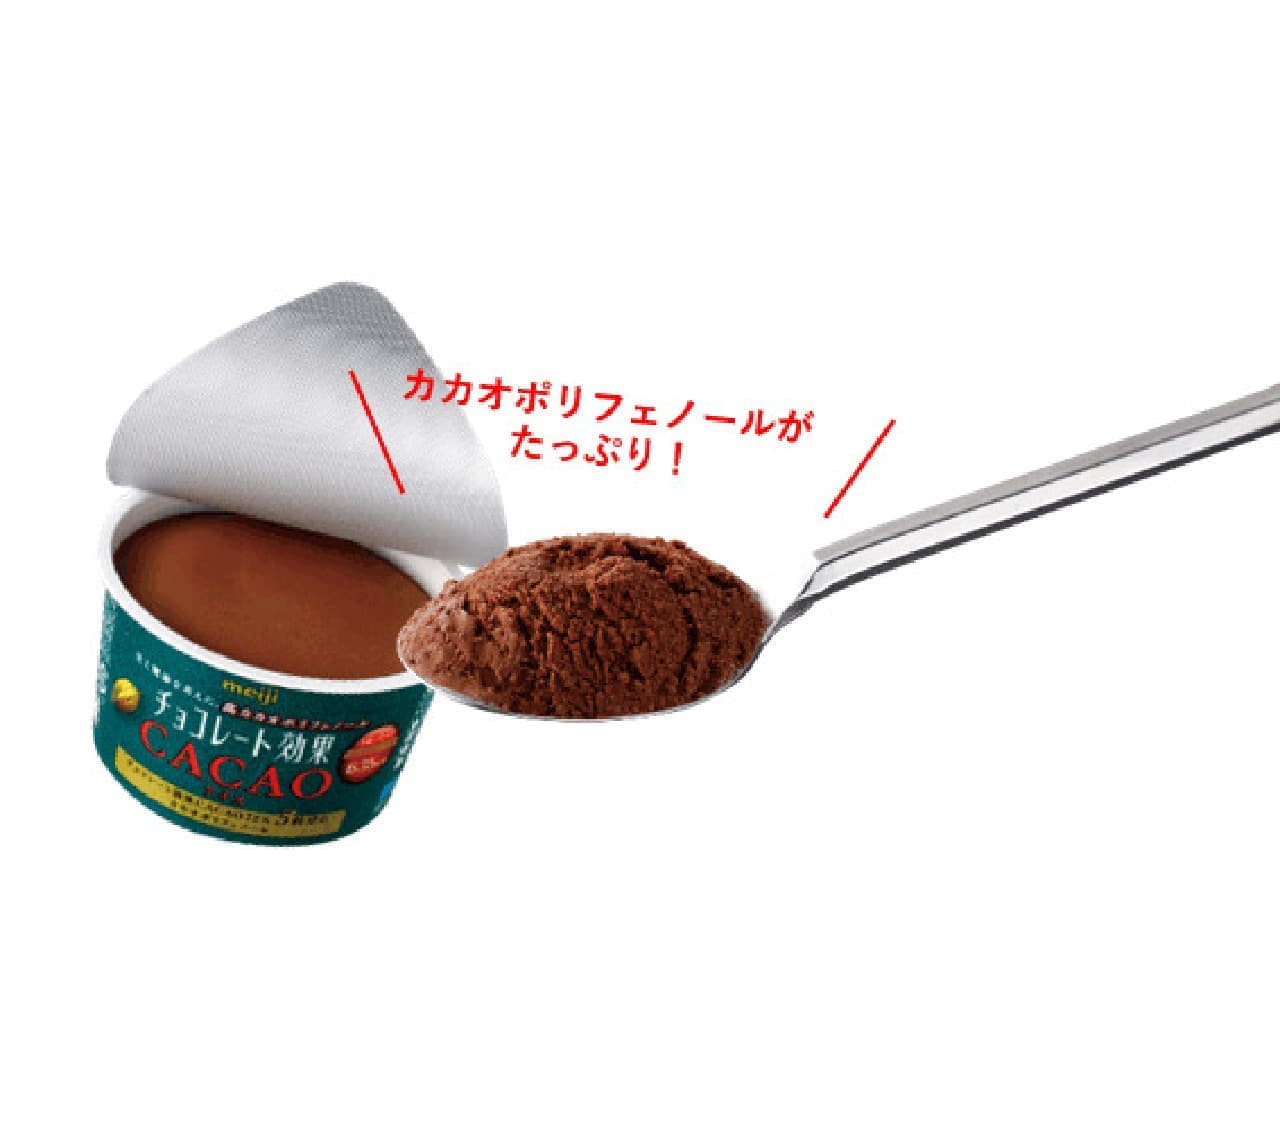 Meiji Chocolate Effect CACAO Ice Cream